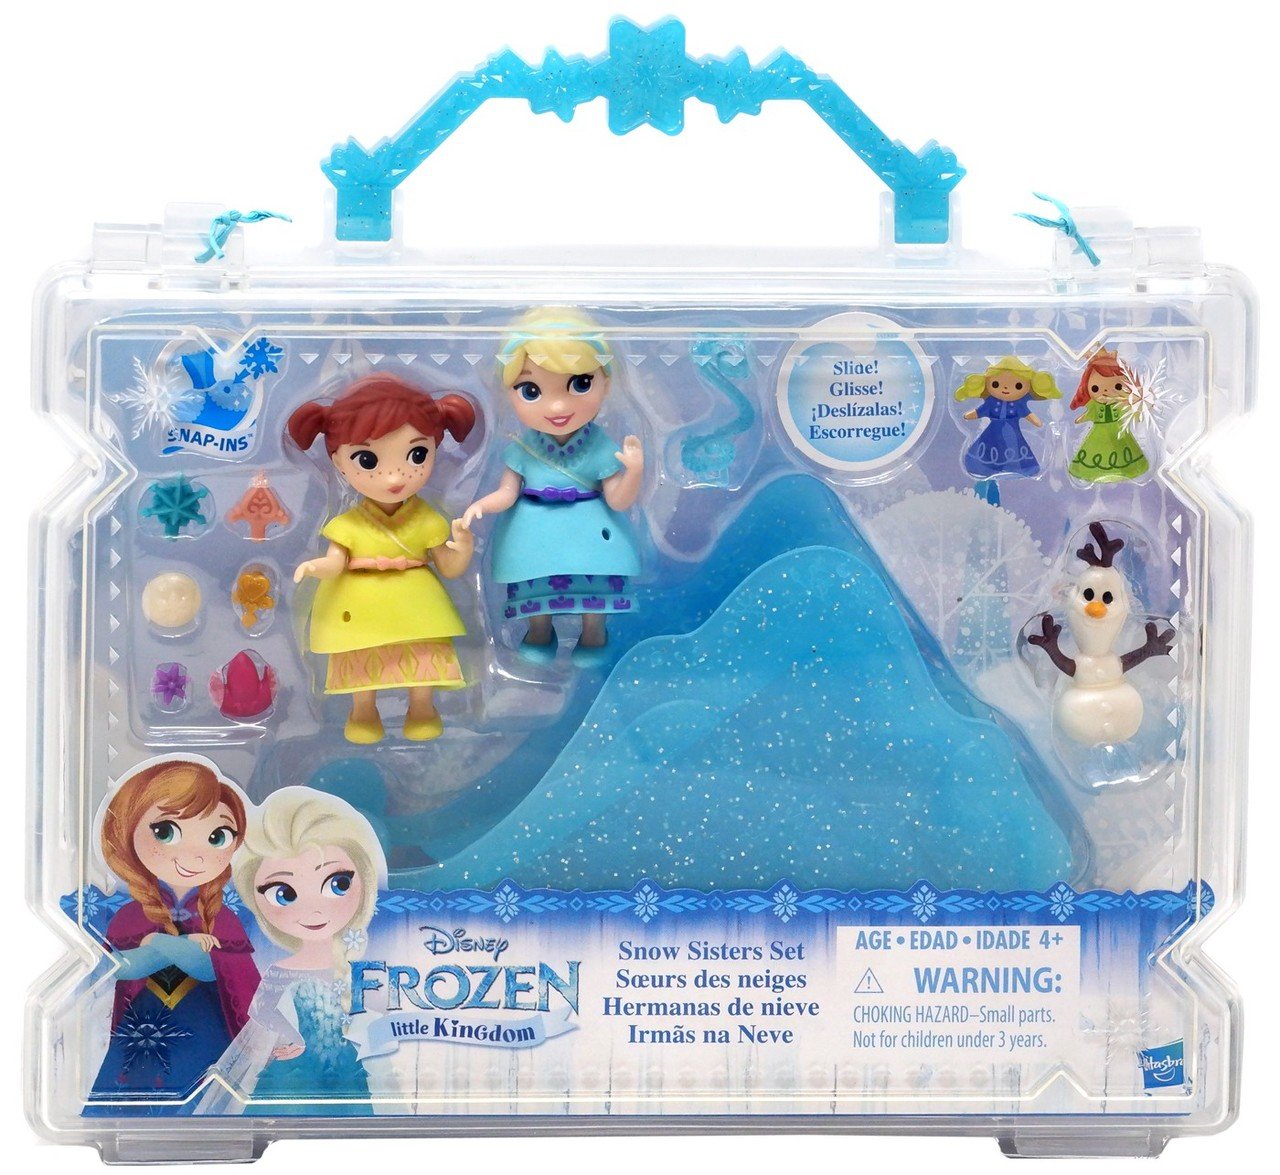 Hasbro Disney Frozen Little Kingdom Oaken'S Ski Trip Mini Action